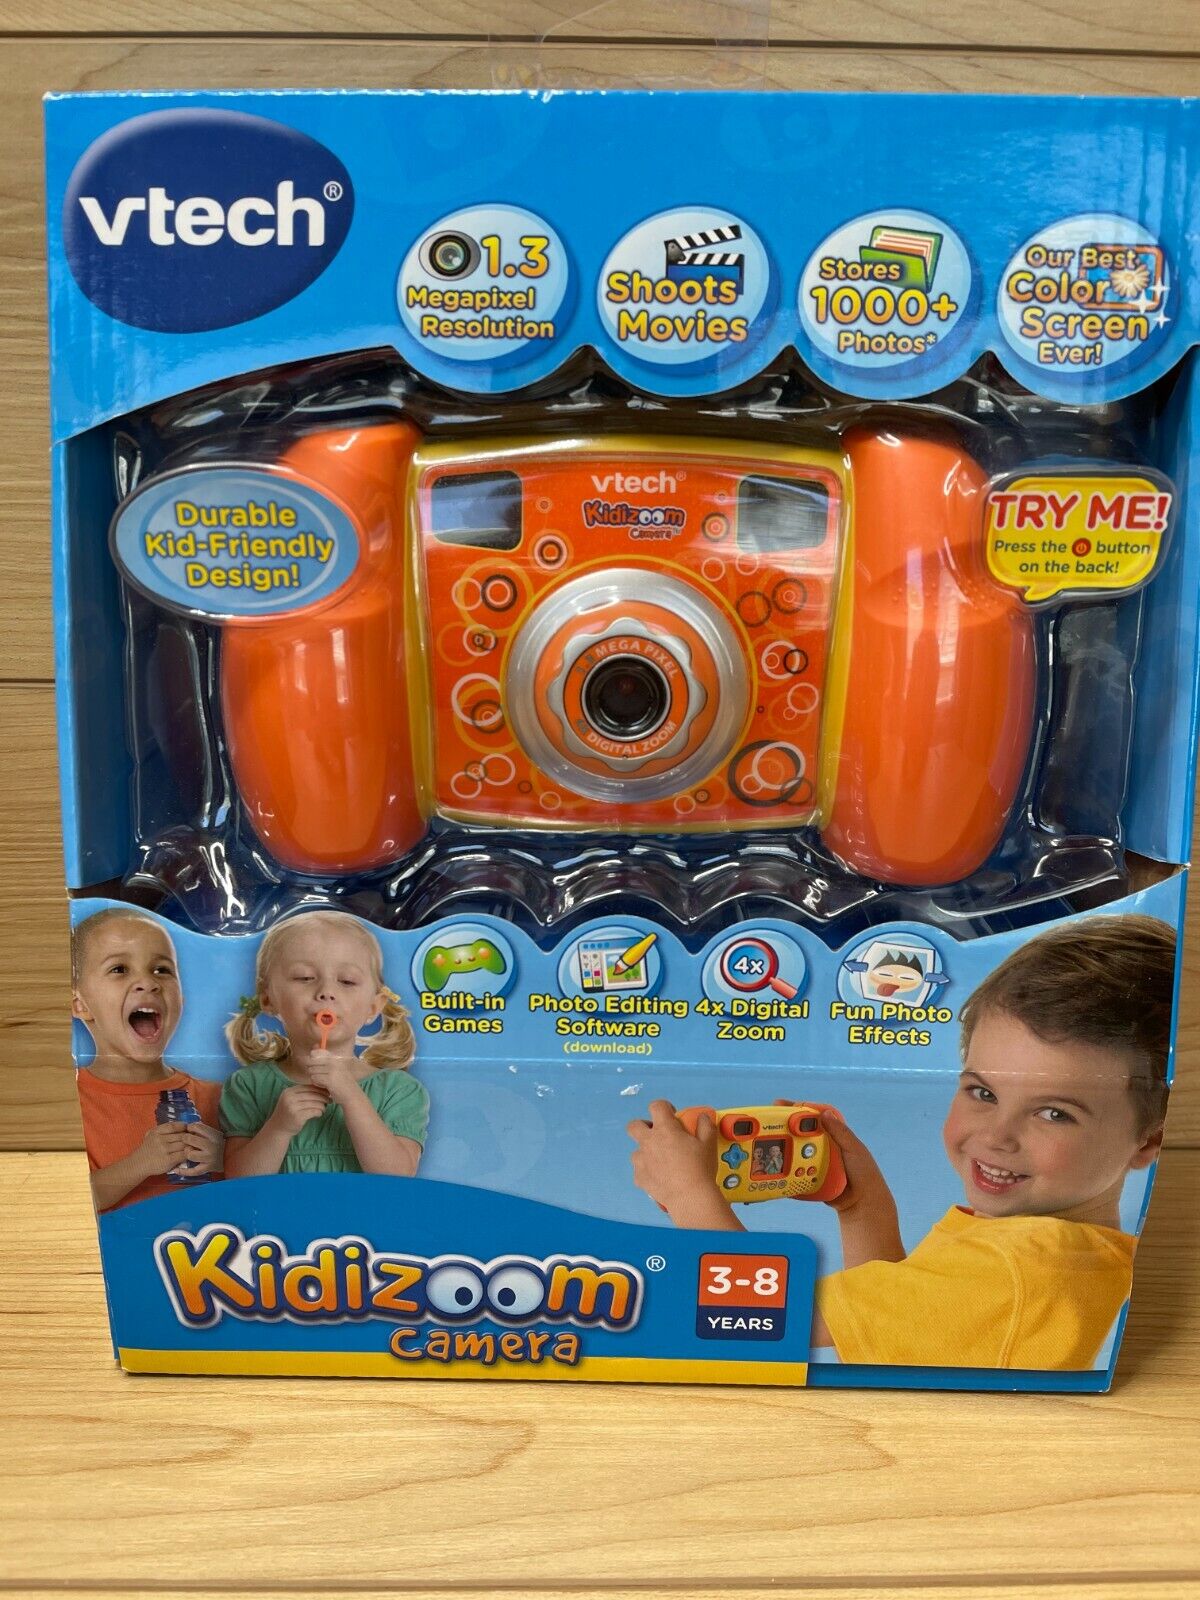 Vtech Kidizoom Camera 1.3 Mega Pixel 4x Zoom Games Movies Orange - NEW  3417761936504